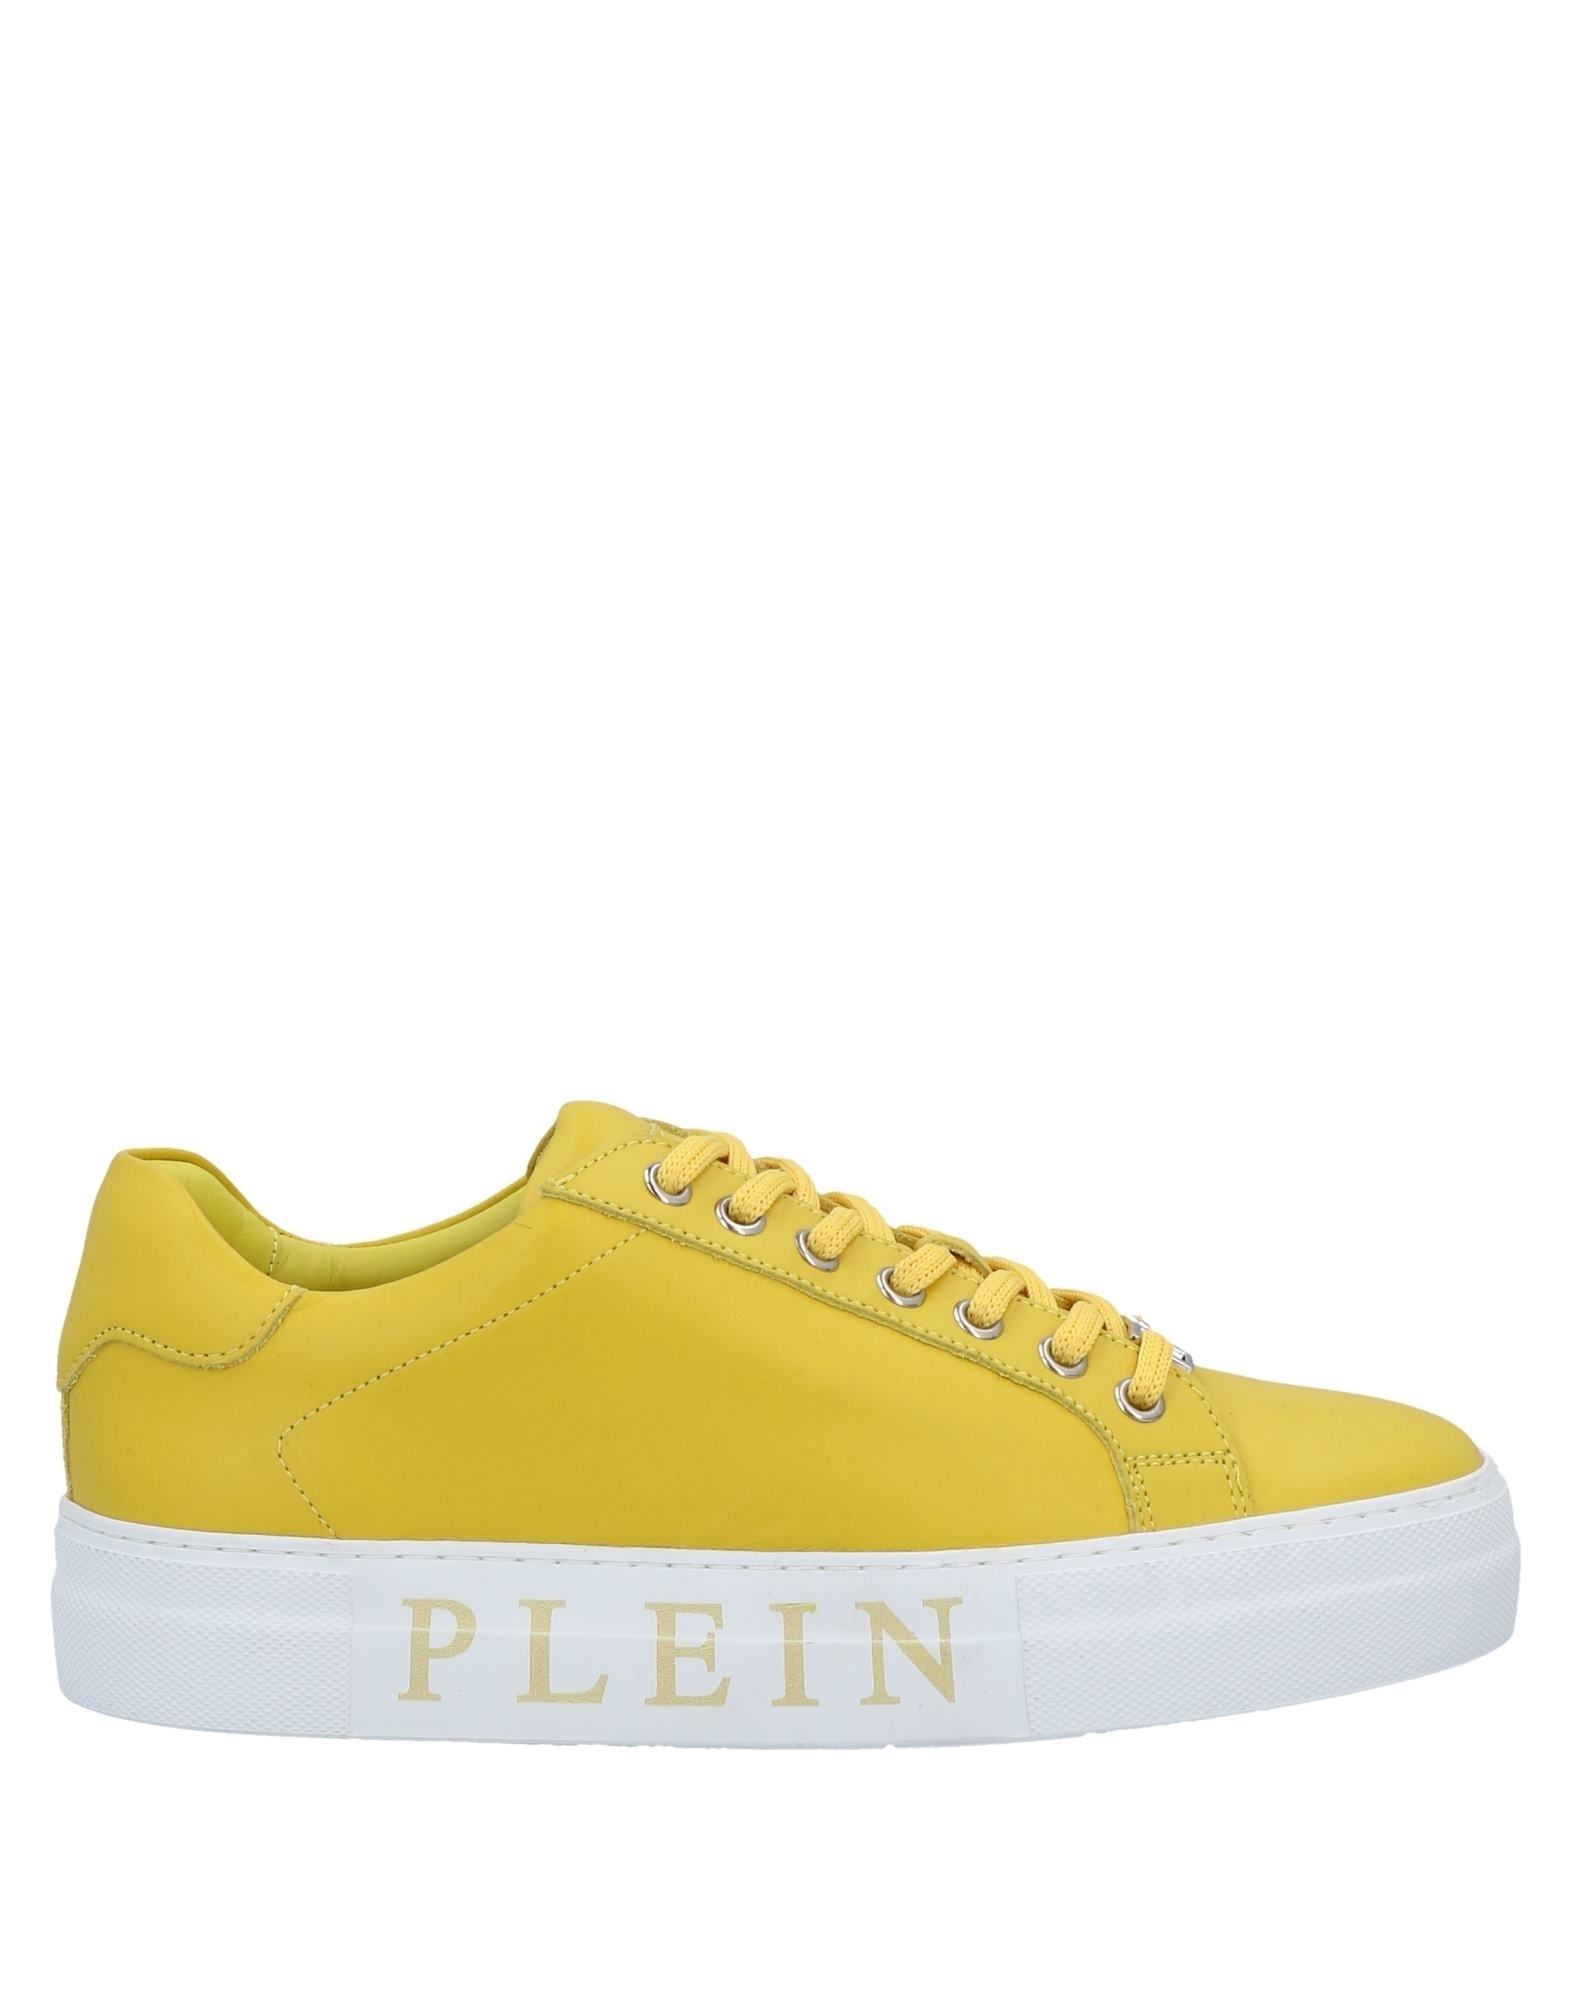 PHILIPP PLEIN Low-tops & sneakers - Item 11937041